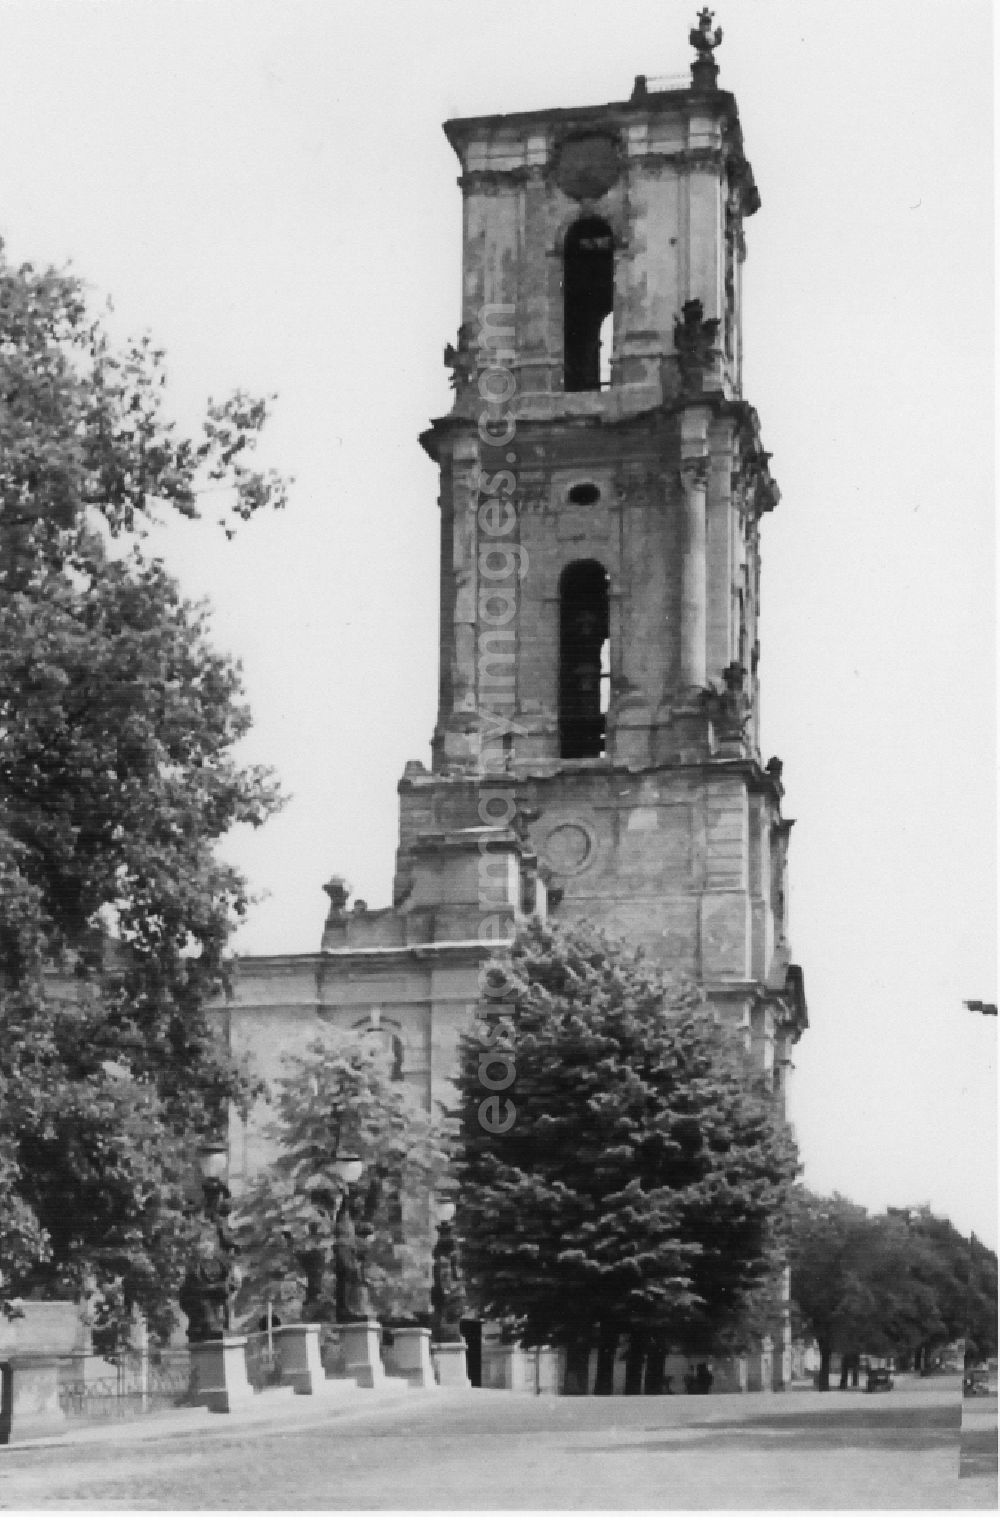 Potsdam: The ruins of the Garrison Church in Potsdam in Brandenburg